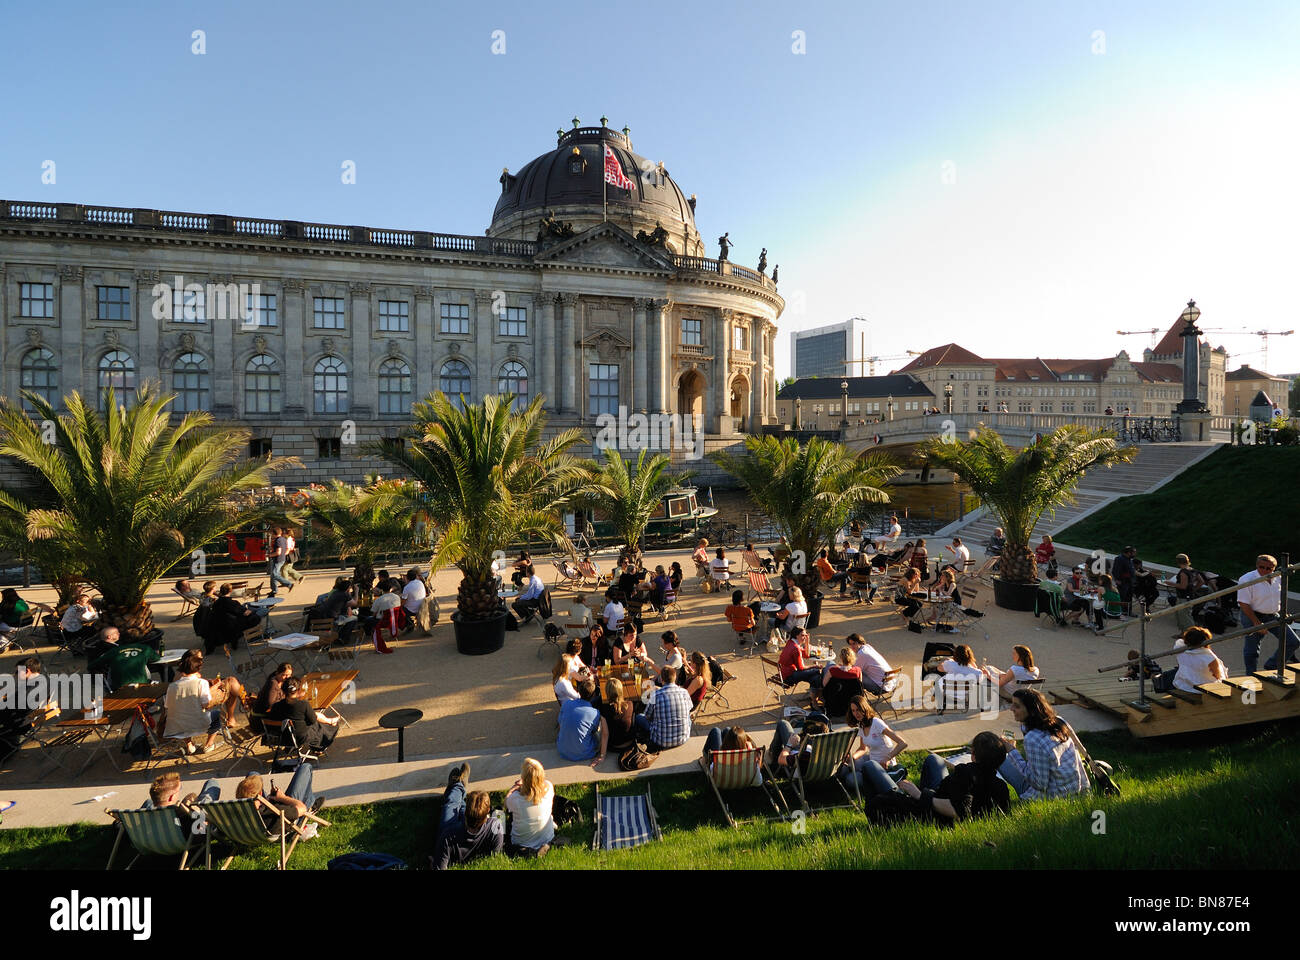 "Strandbar Mitte" Stadtstrand mit dem Bodemuseum Museum, Lido Lage gegenüber der Museumsinsel, Monbijoupark, Berlin. Stockfoto